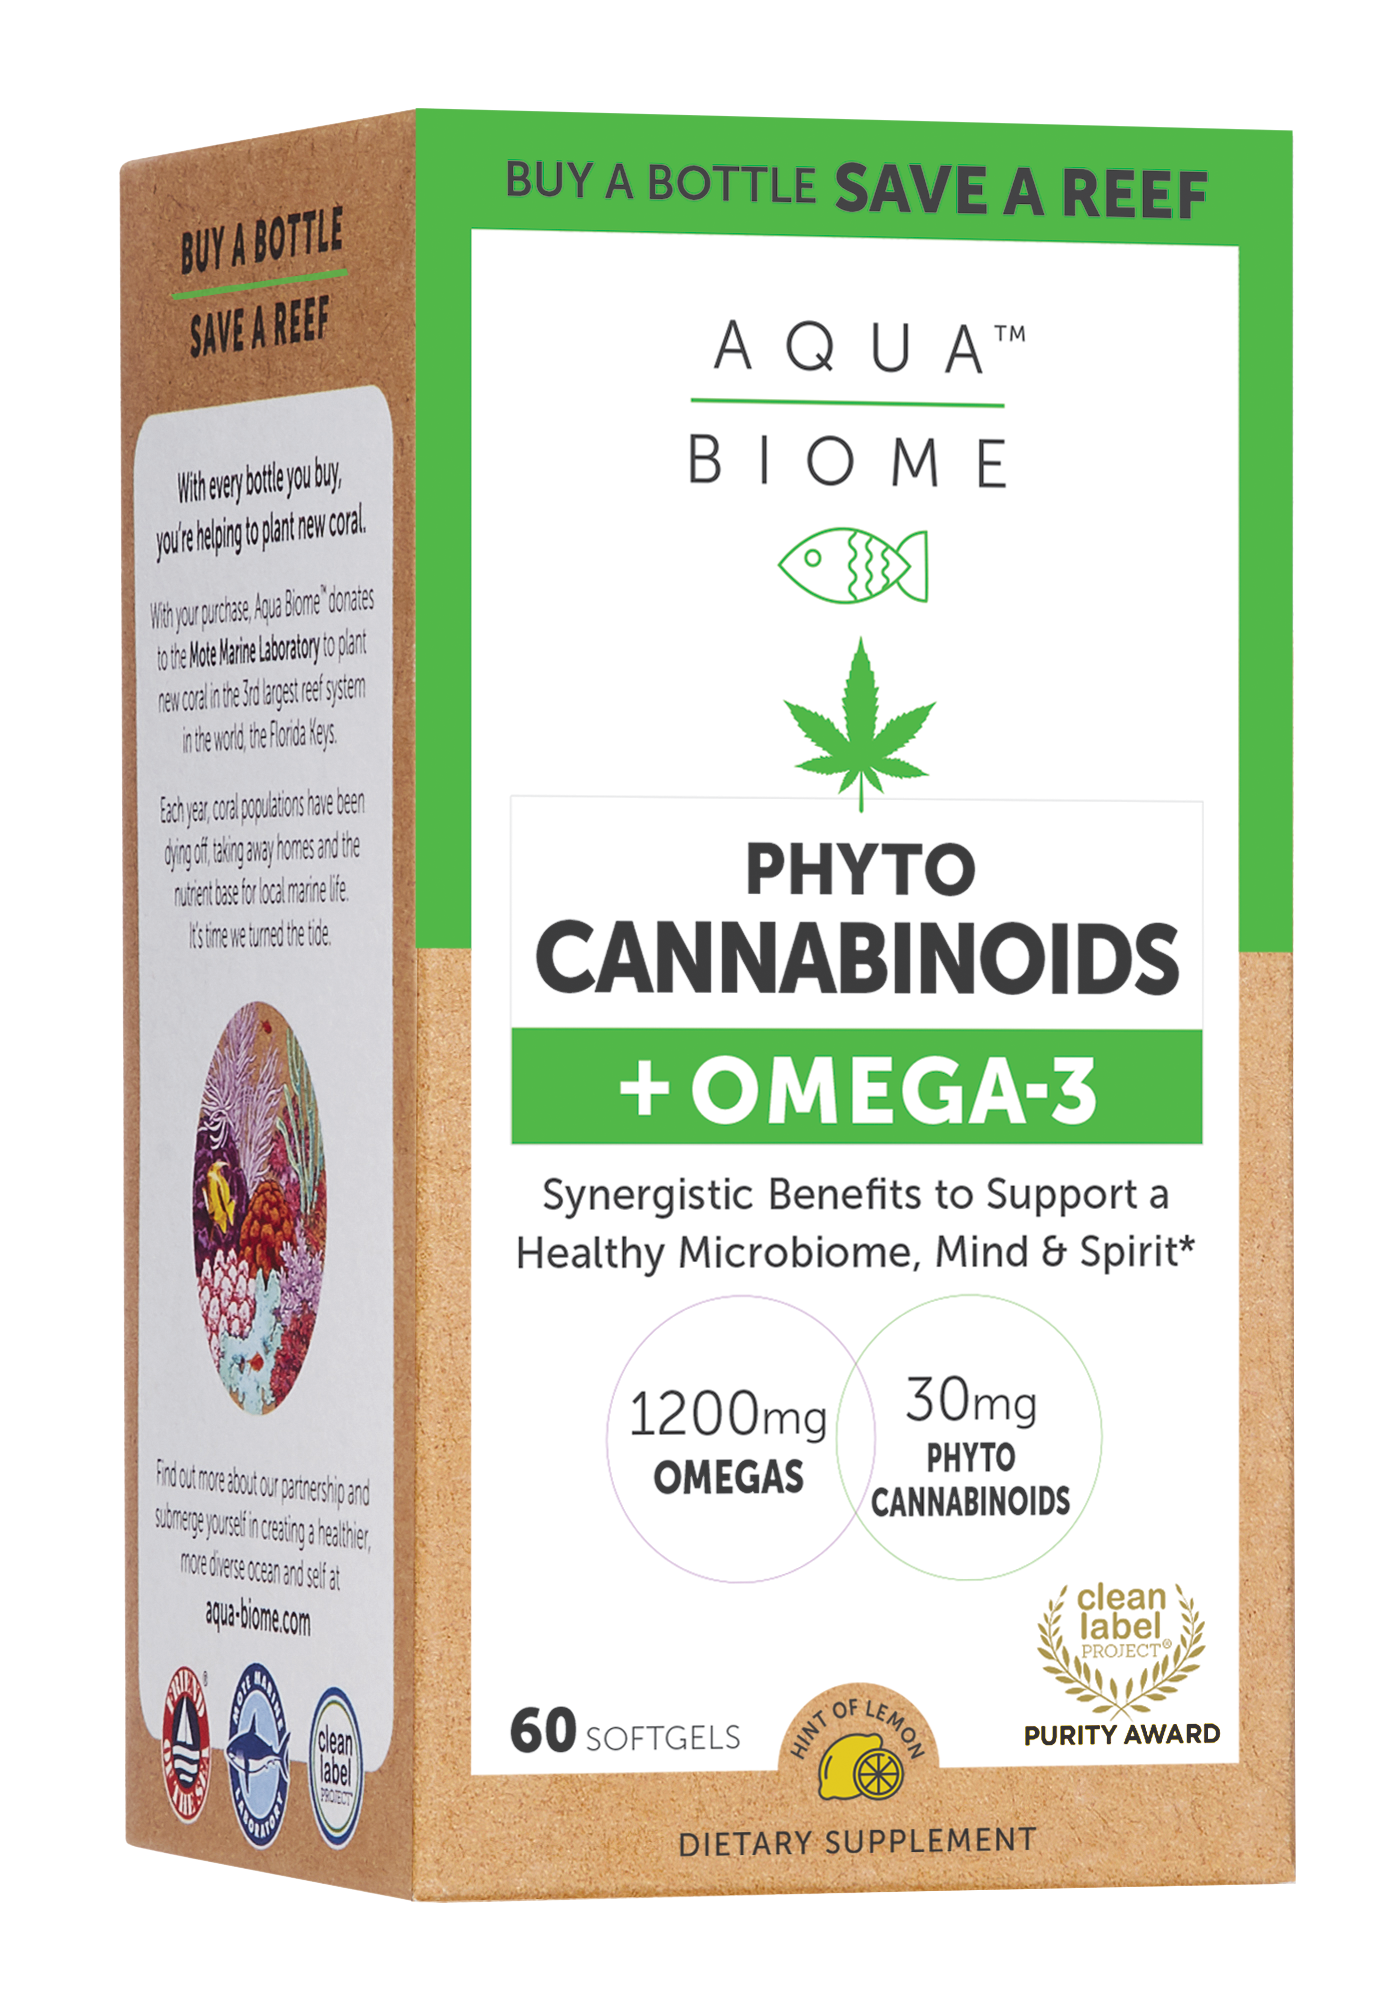 Aqua Biome™ Phytocannabinoids + Omega-3, Best of Winner, Consumer Choice Award.